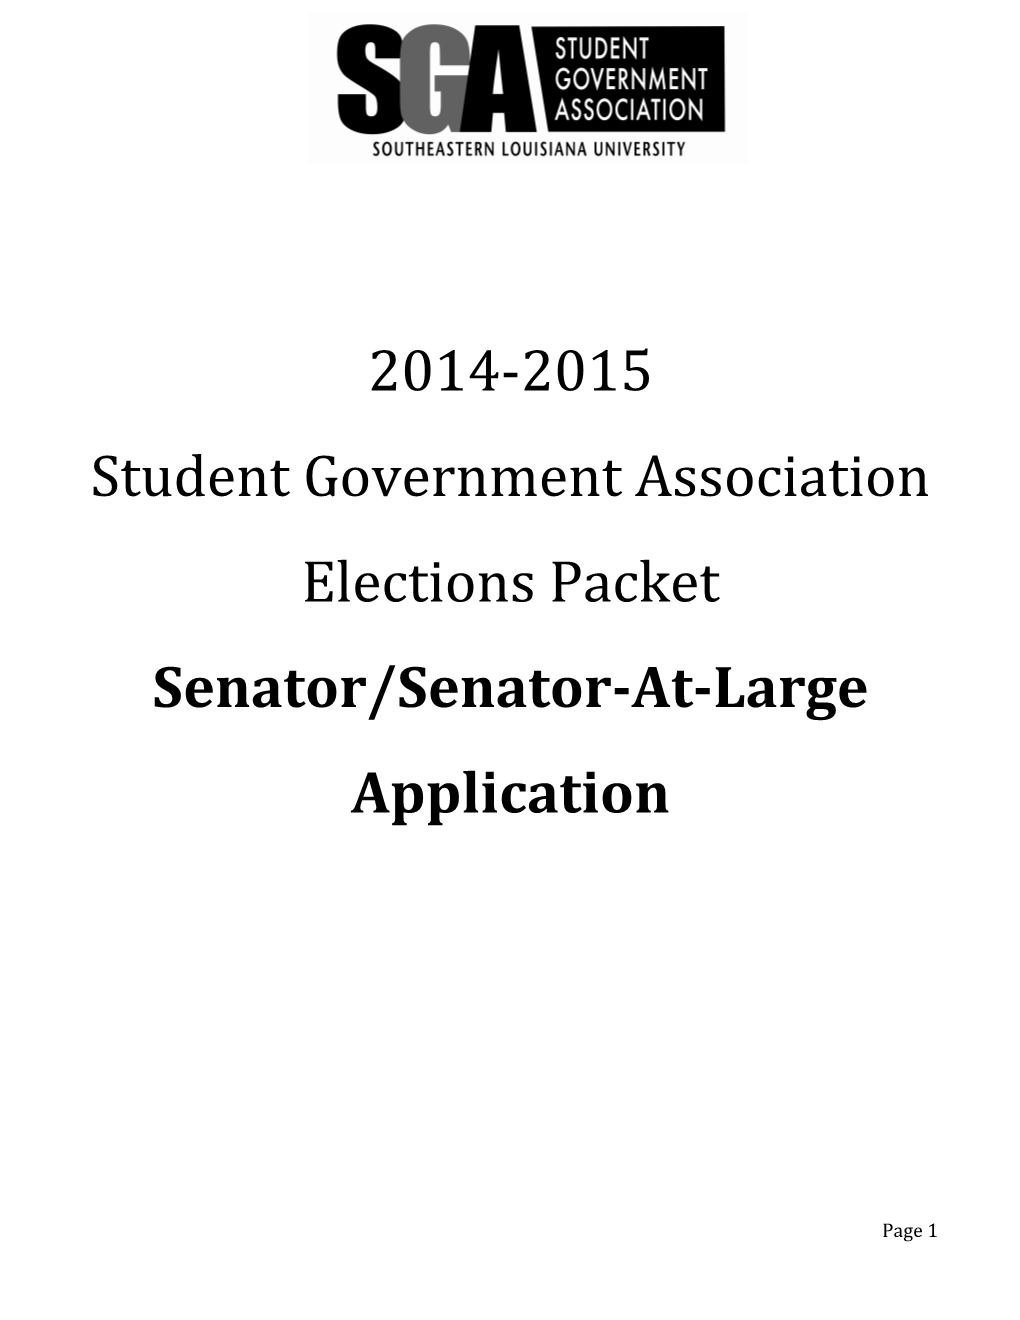 Senator/Senator-At-Large Application